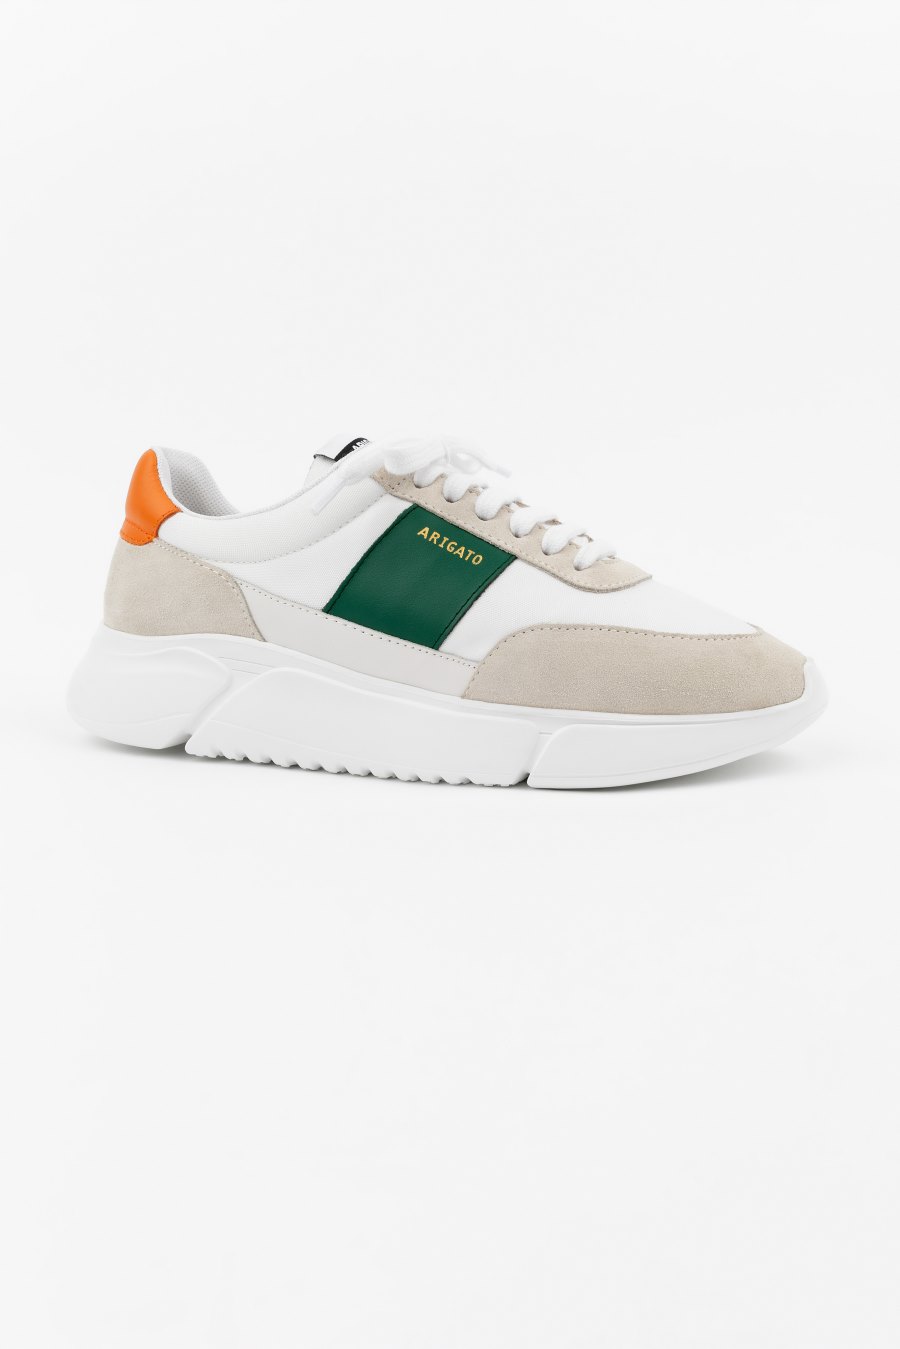 White / Green / Orange Axel Arigato Genesis Vintage Runner Sneakers Canada | CA1715-48